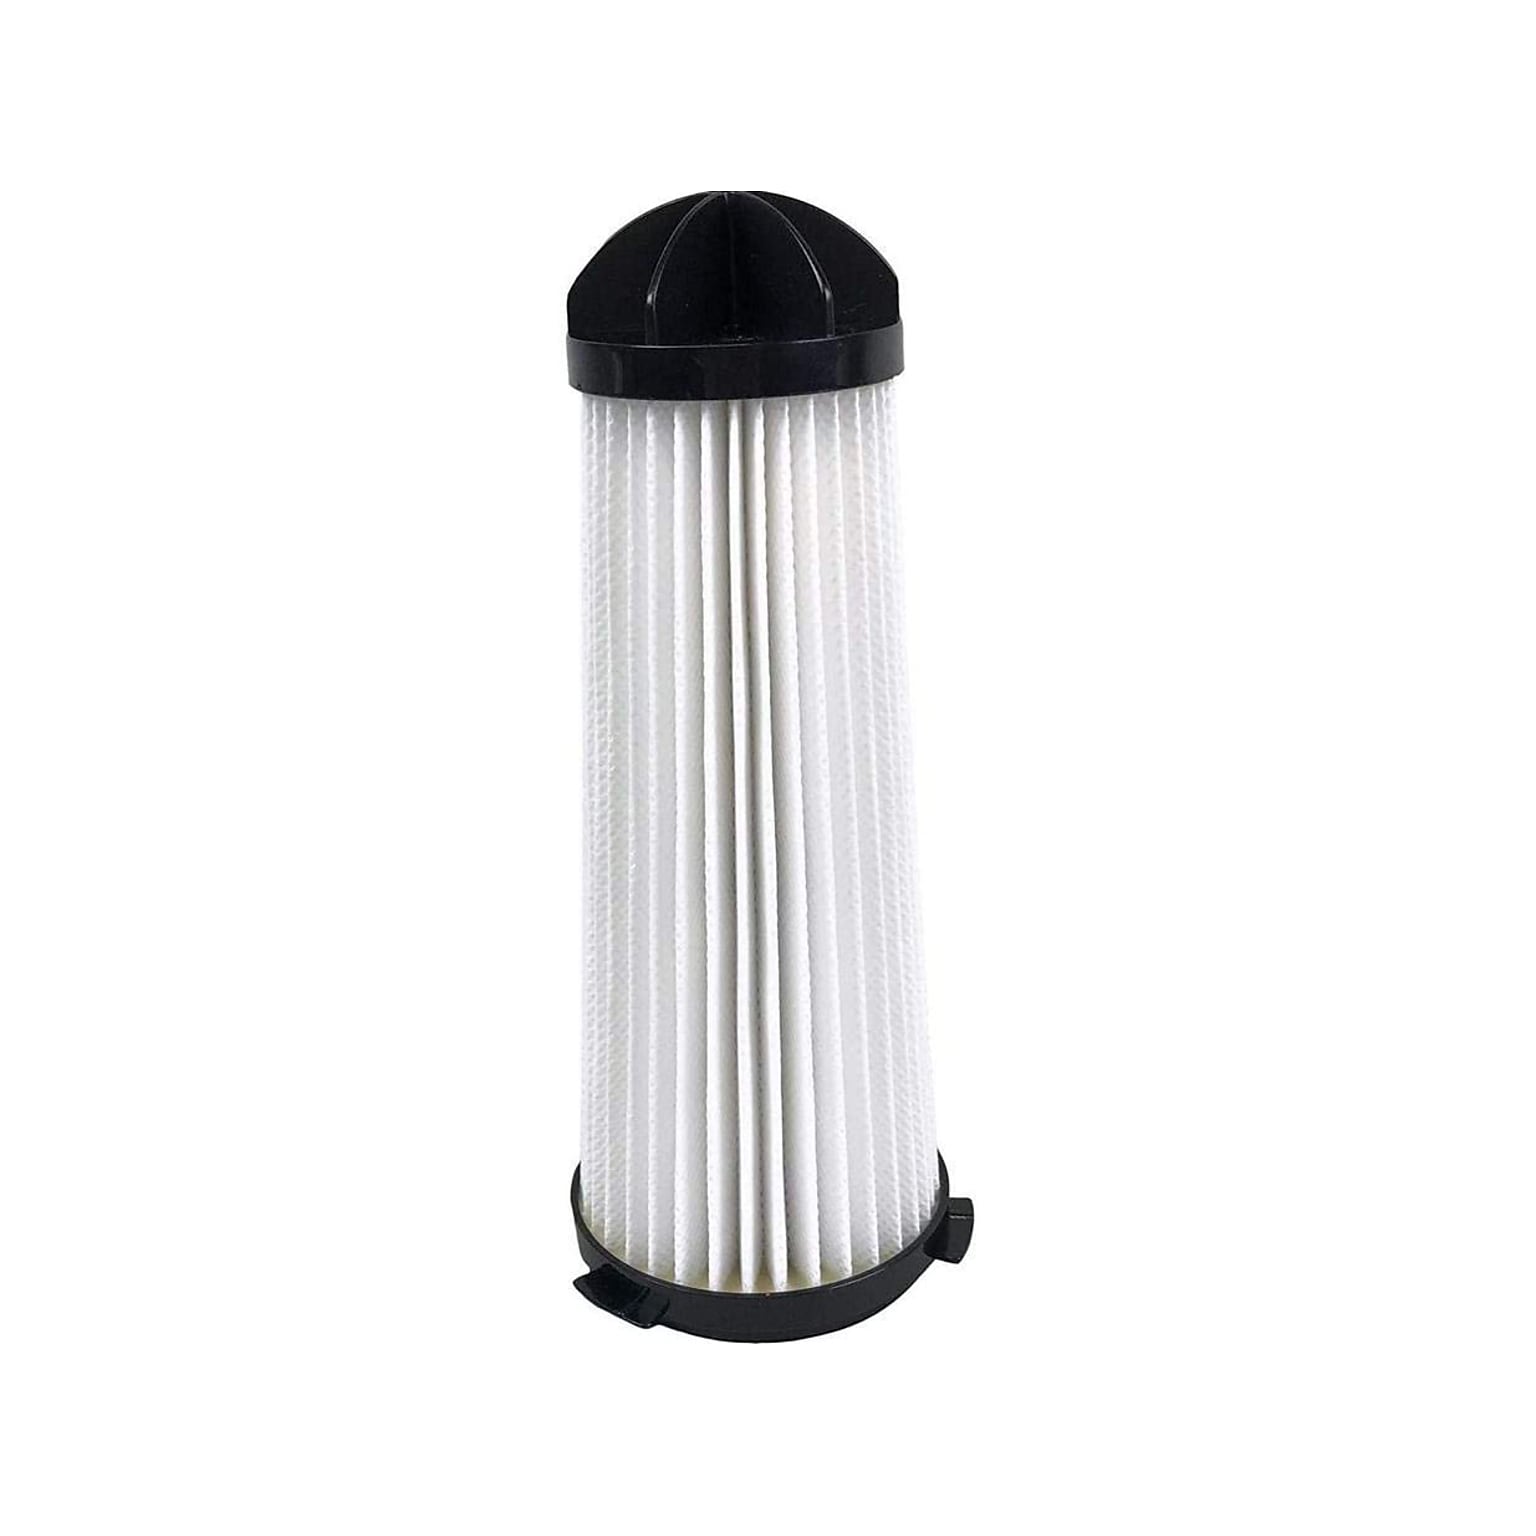 Hoover Vac Pro Vacuum Hepa Filter, Black/White (2KE2110000)